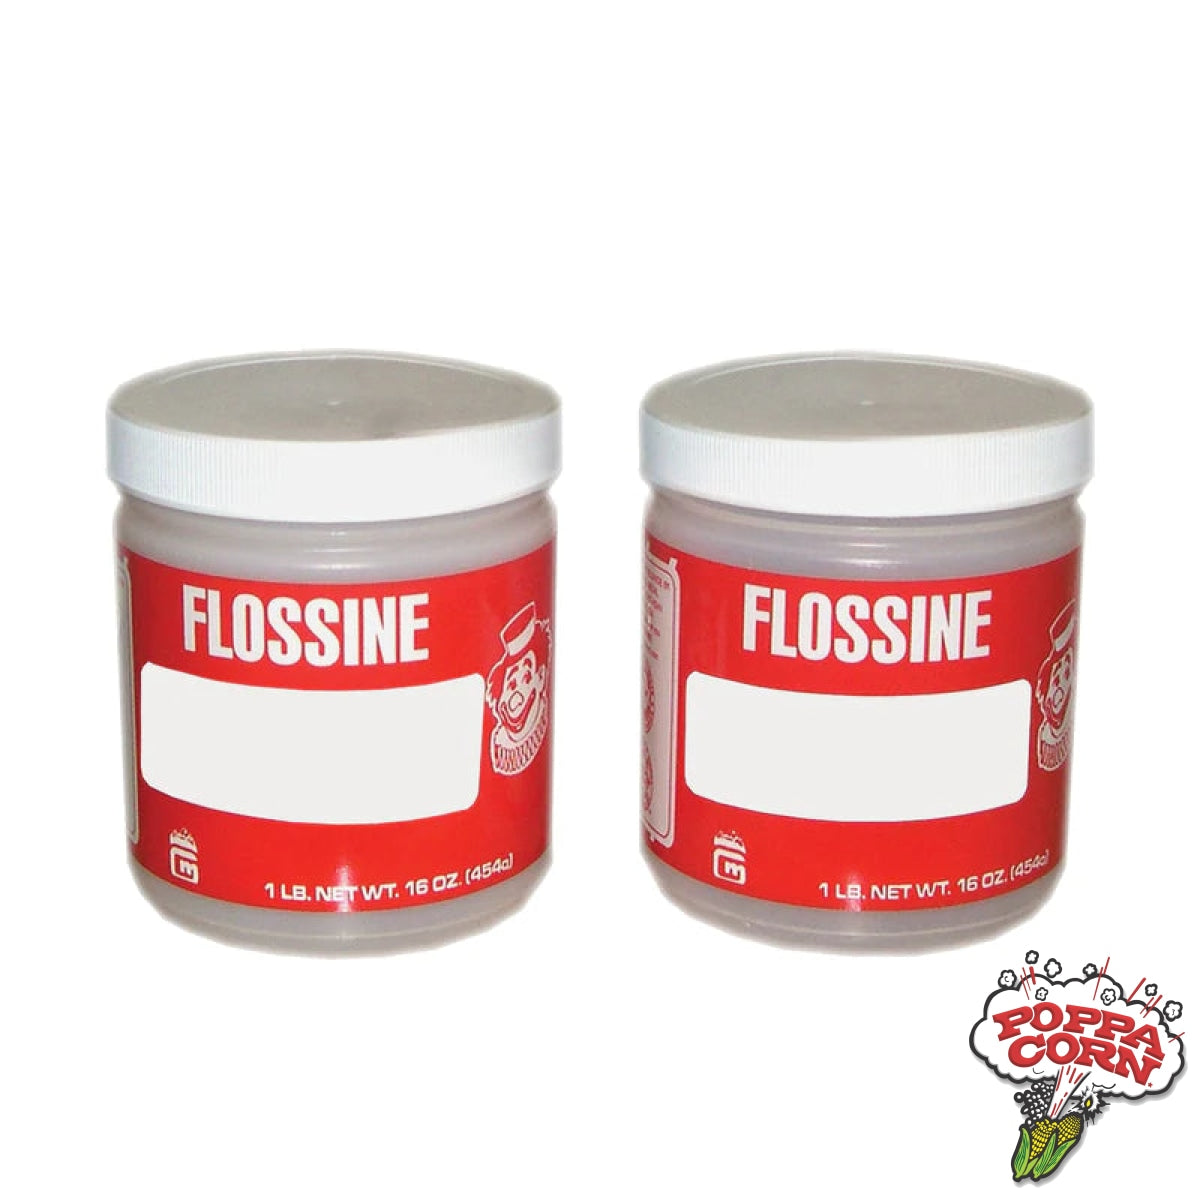 Banana Flossine® - 1LB Jar - FLS009 - Poppa Corn Corp